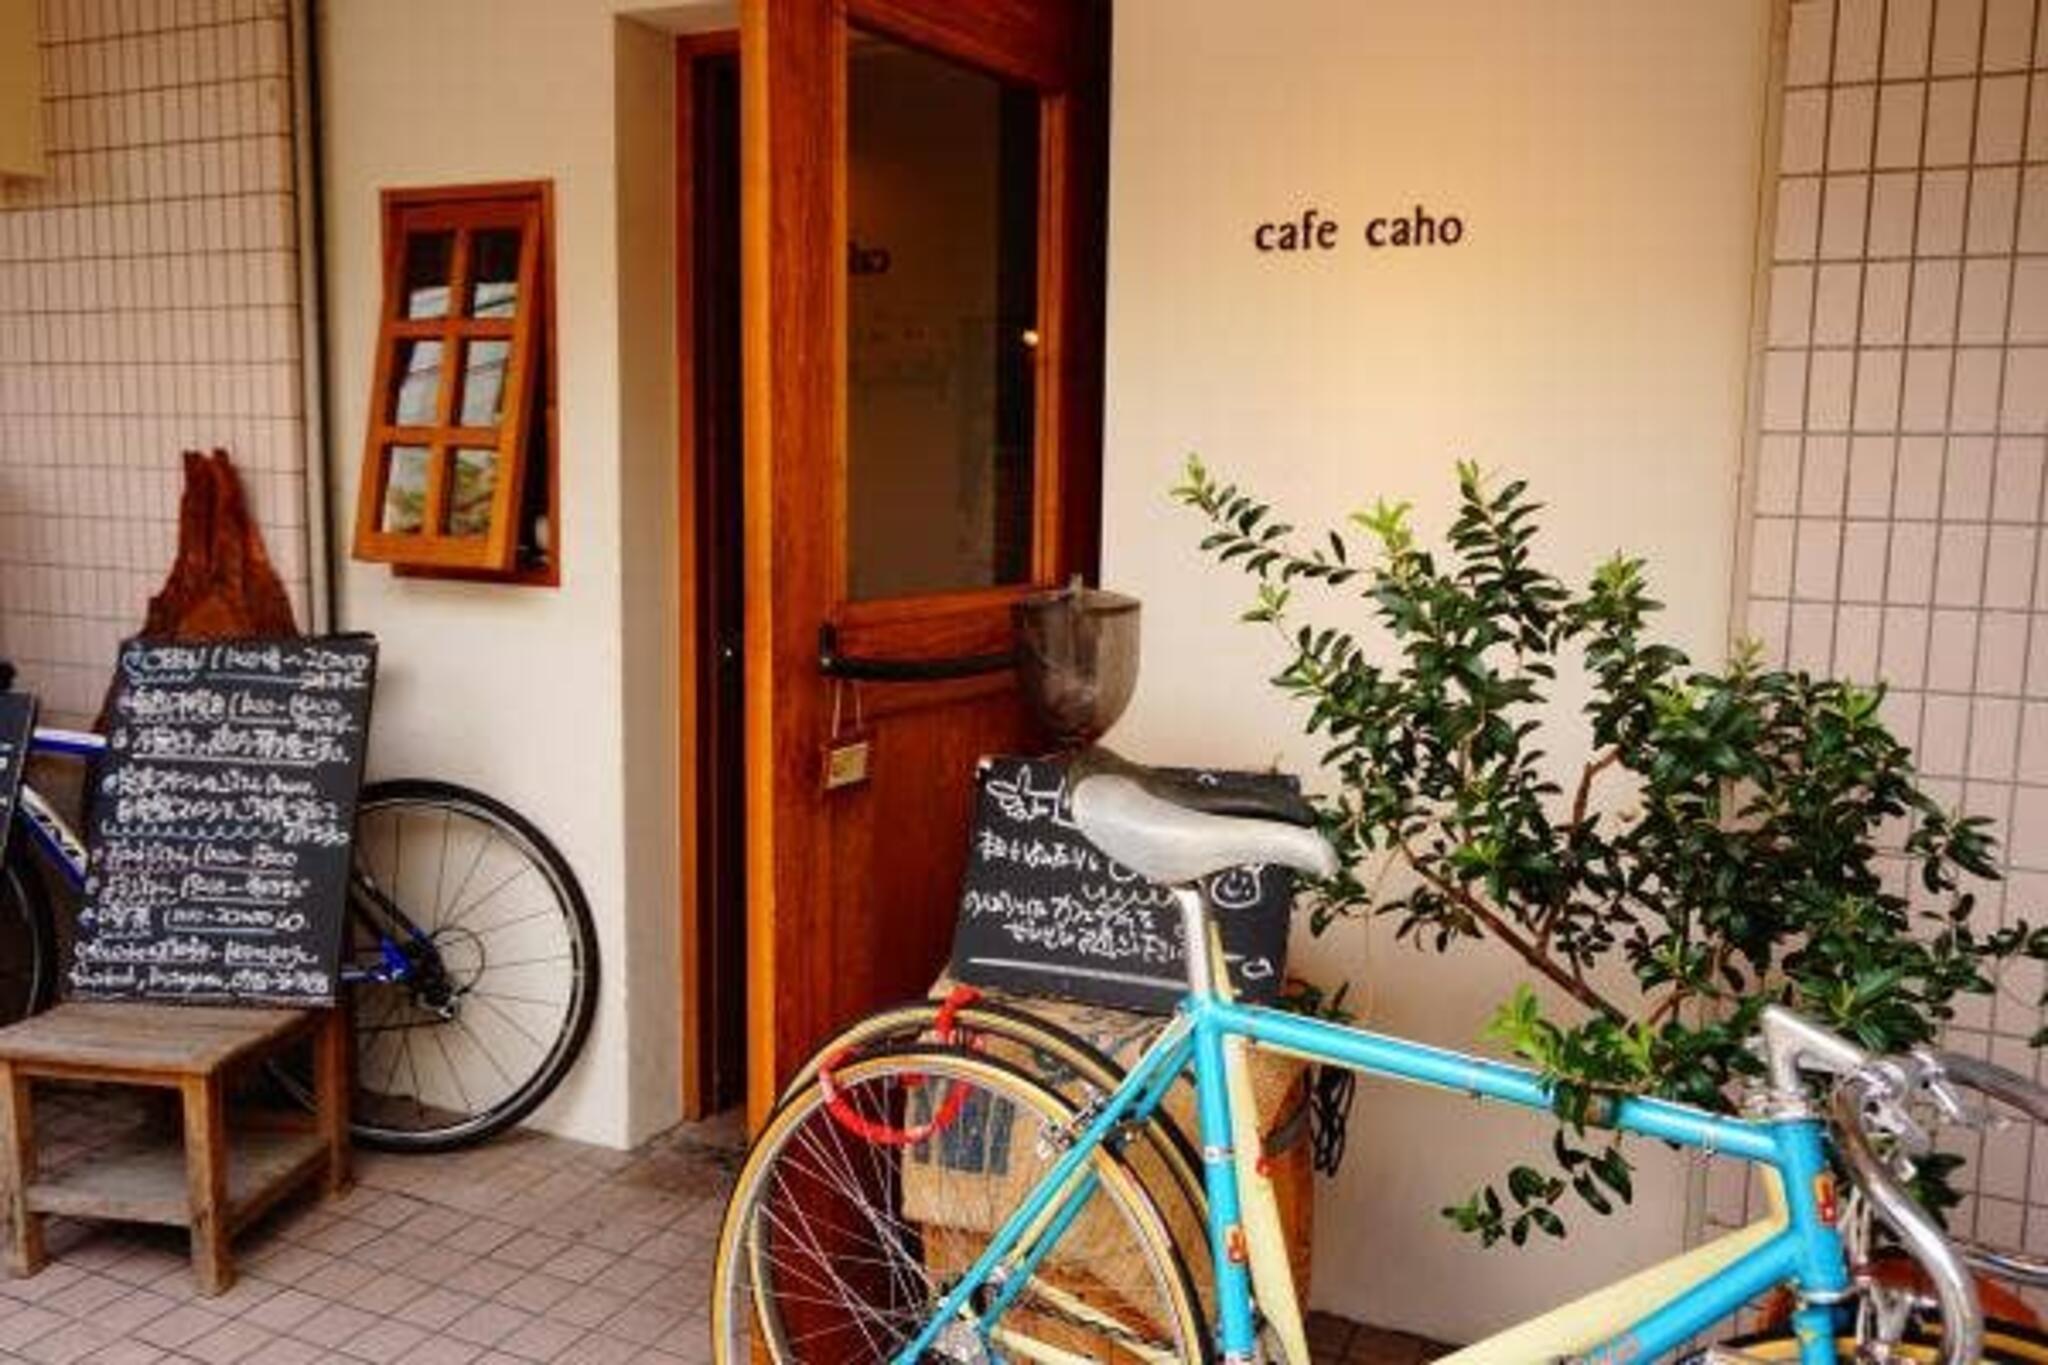 cafe cahoの代表写真3